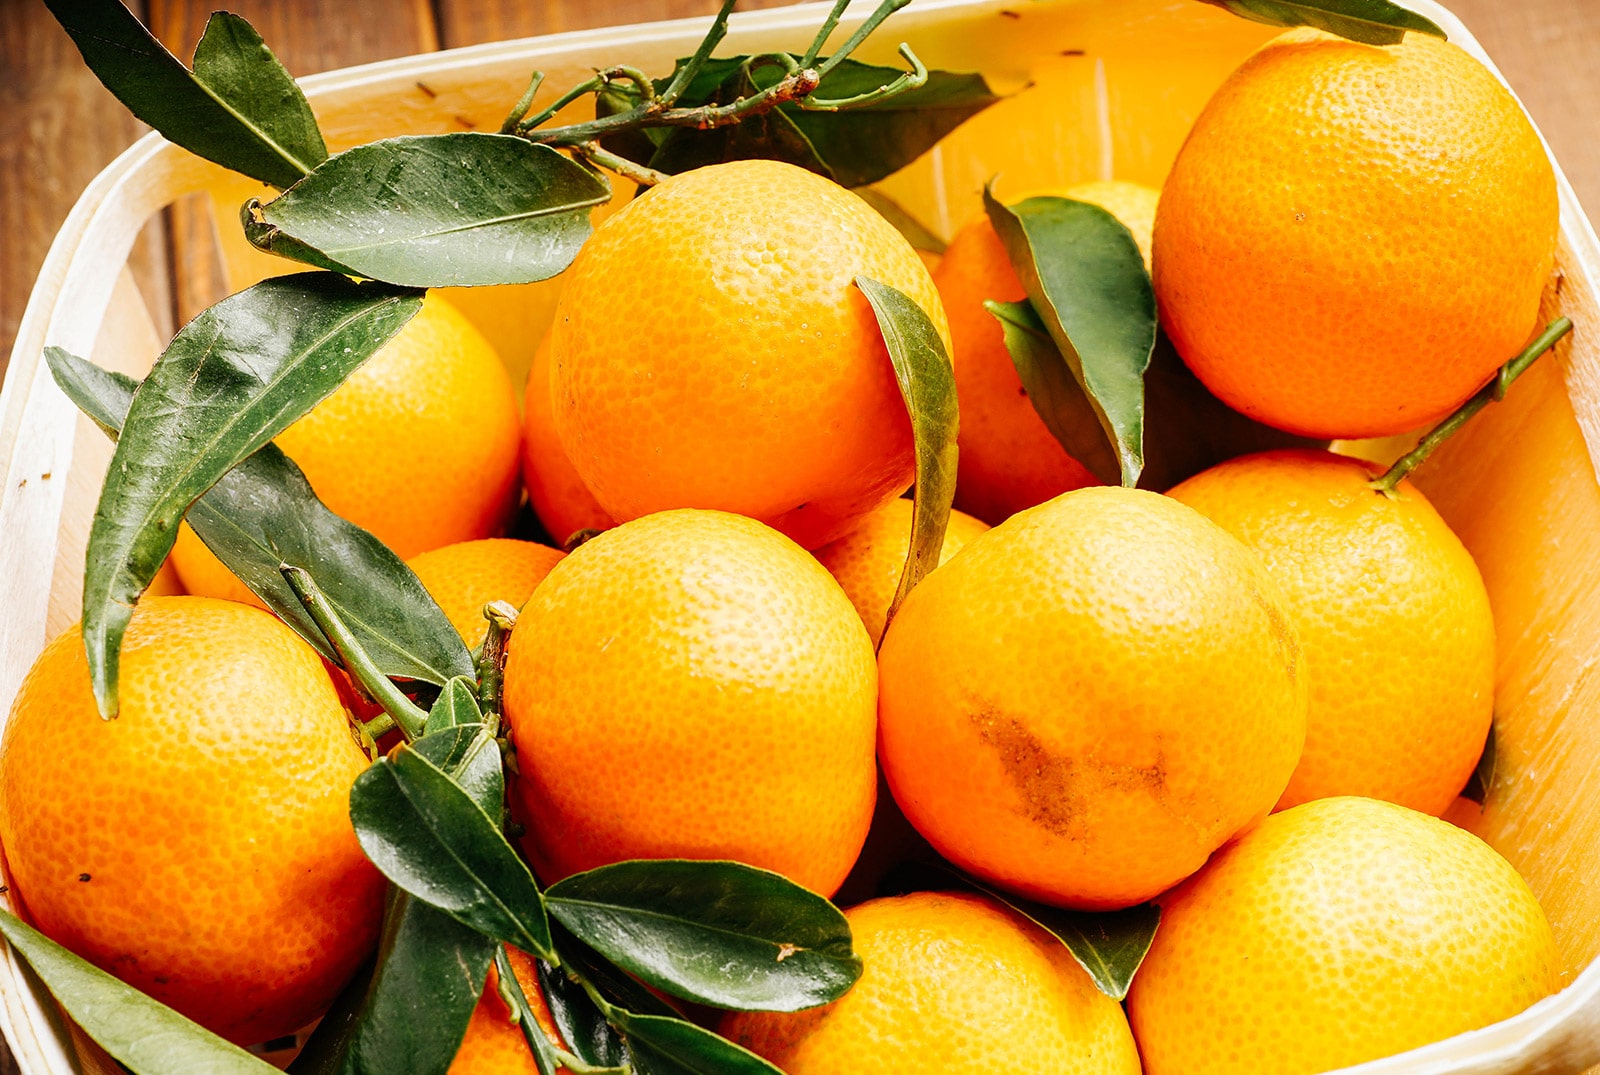 A basket of fresh-picked mandarins